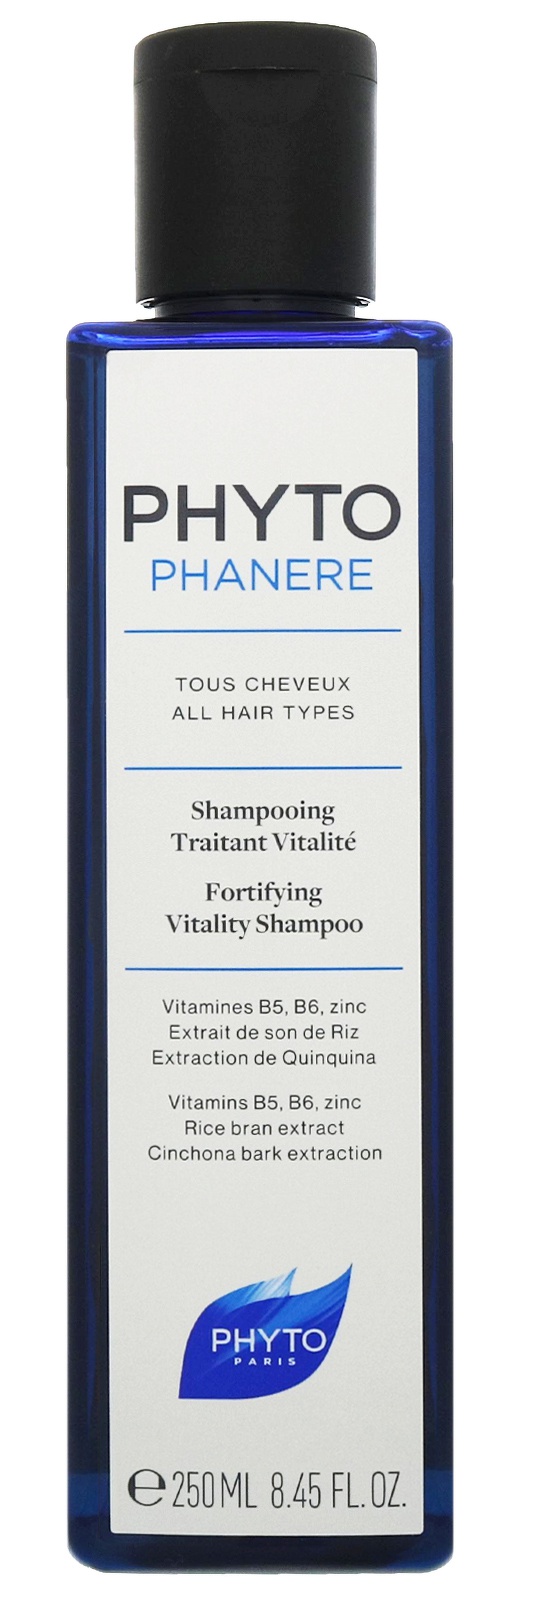 Phyto Paris Phyto Phanere Fortifying Vitality Shampoo